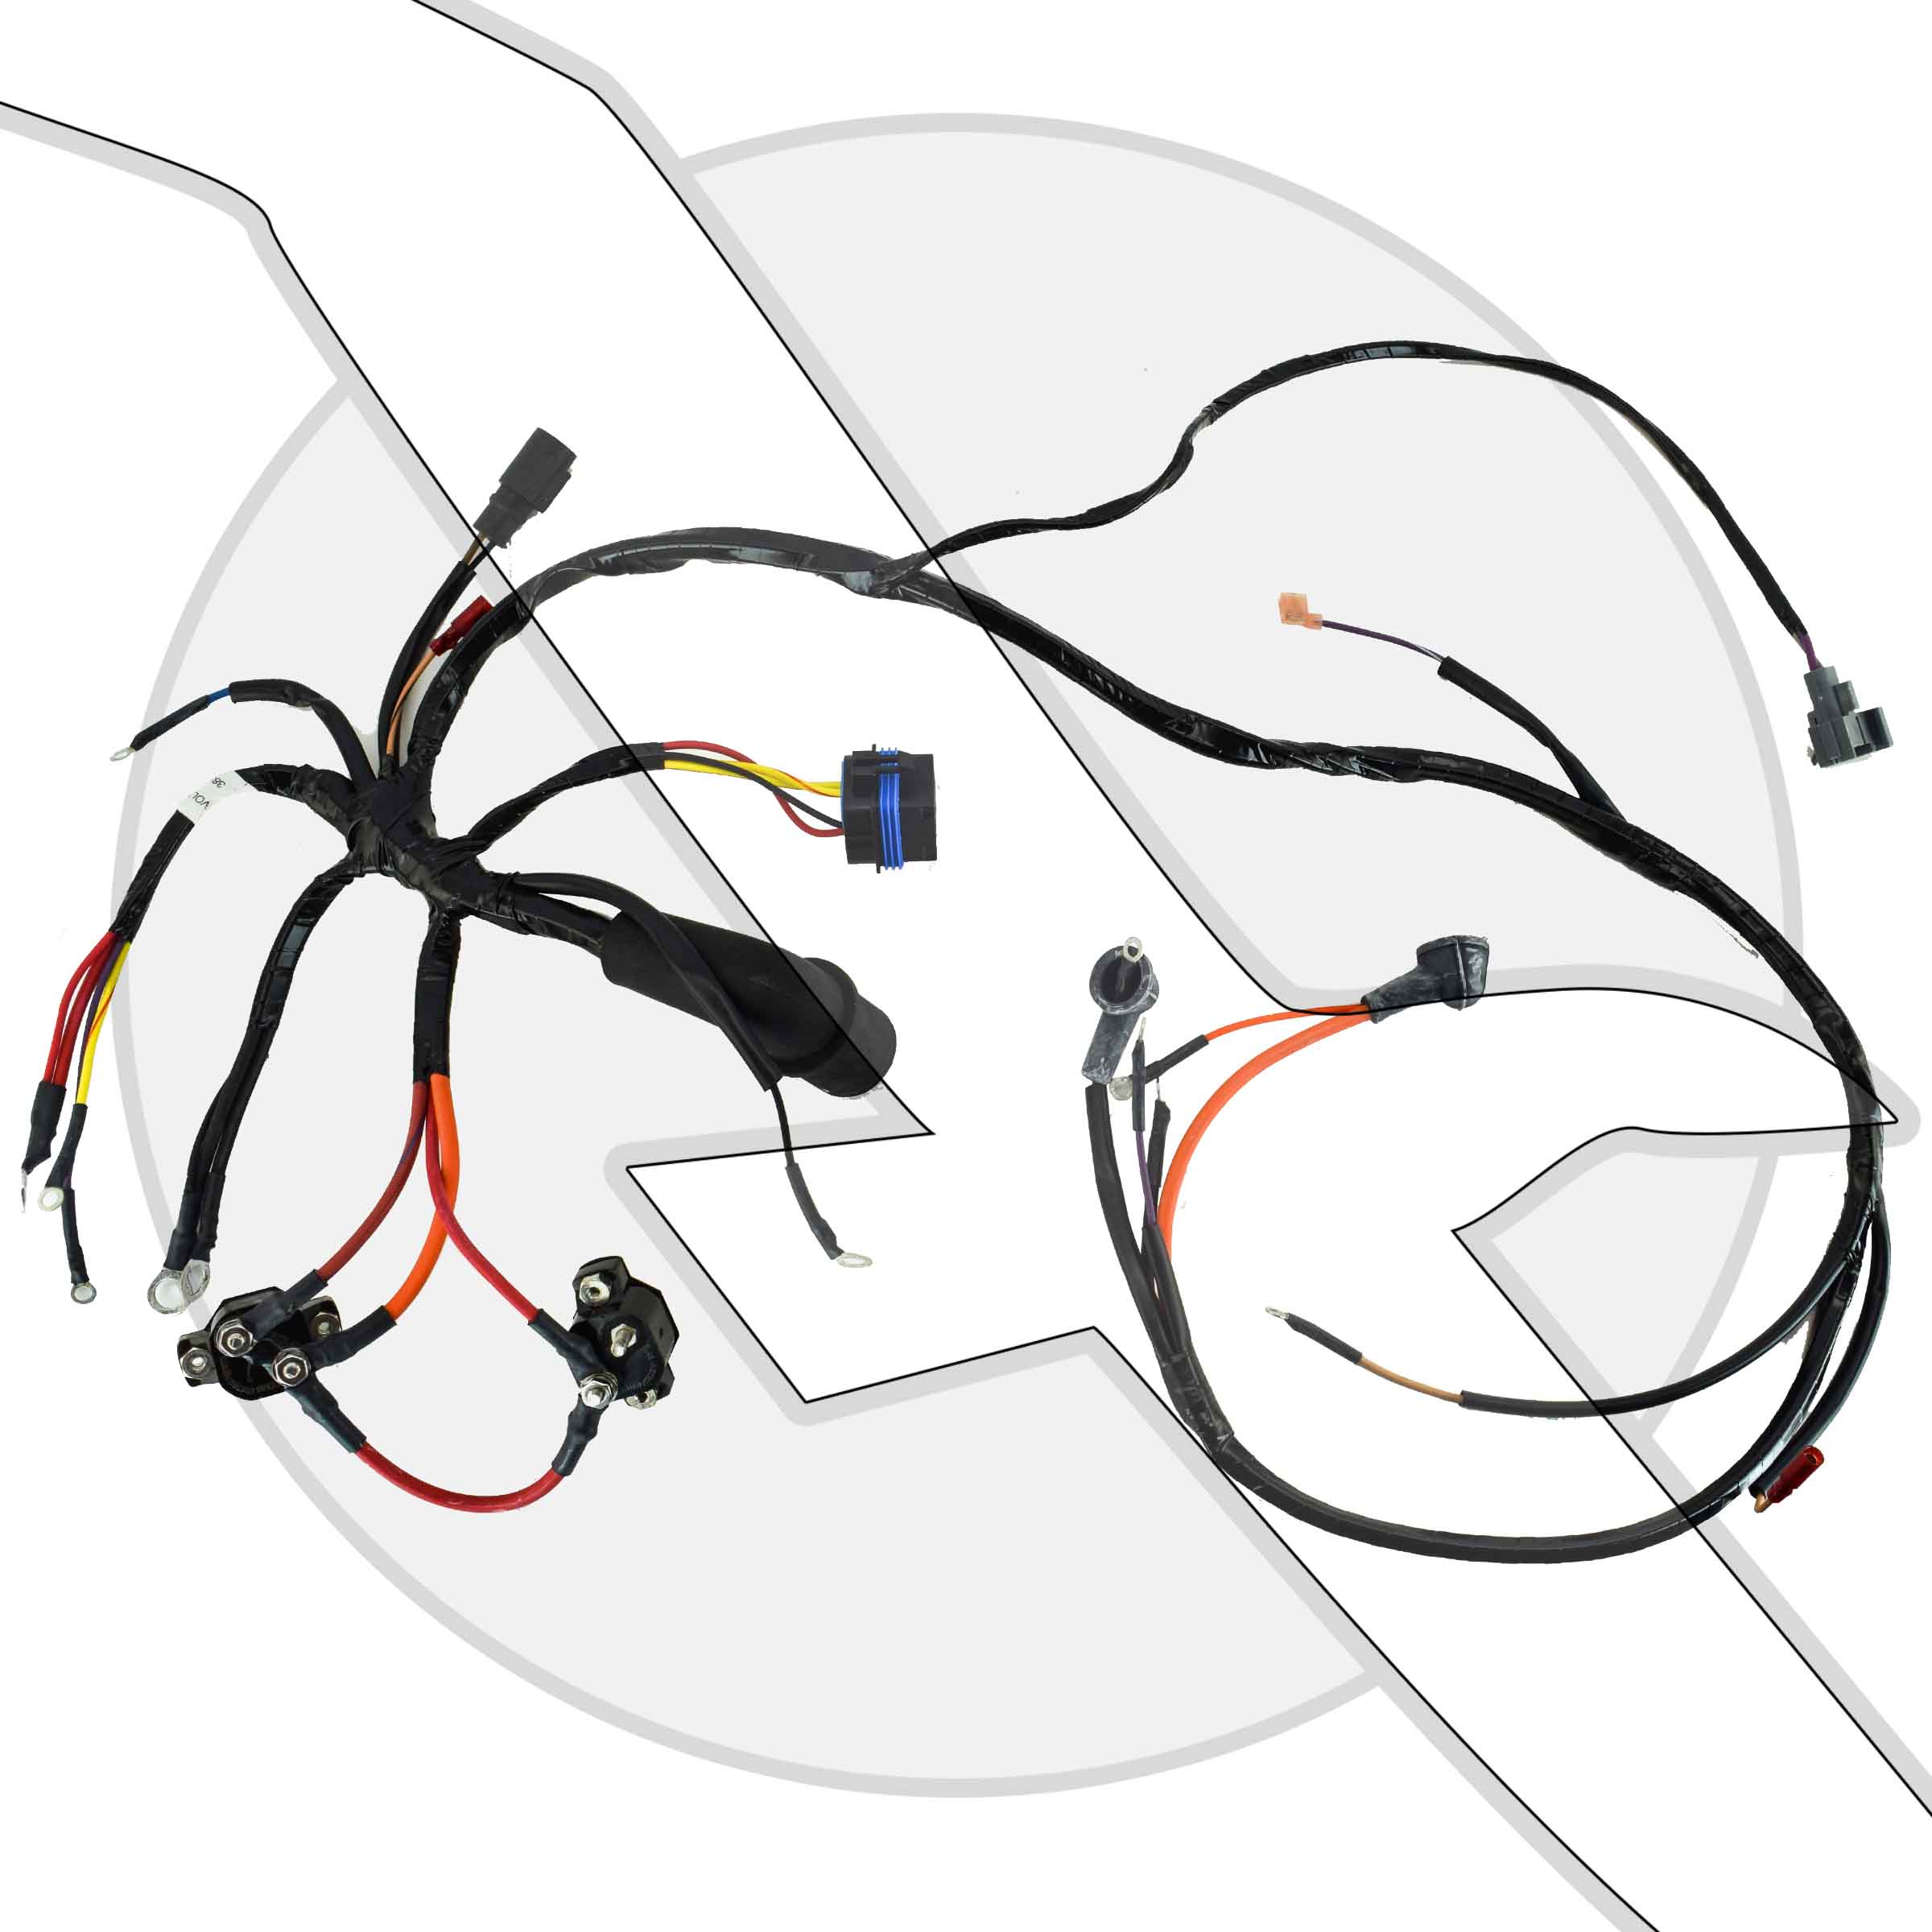 Omc Cobra 3 0 Wiring Diagram - Wiring Diagram